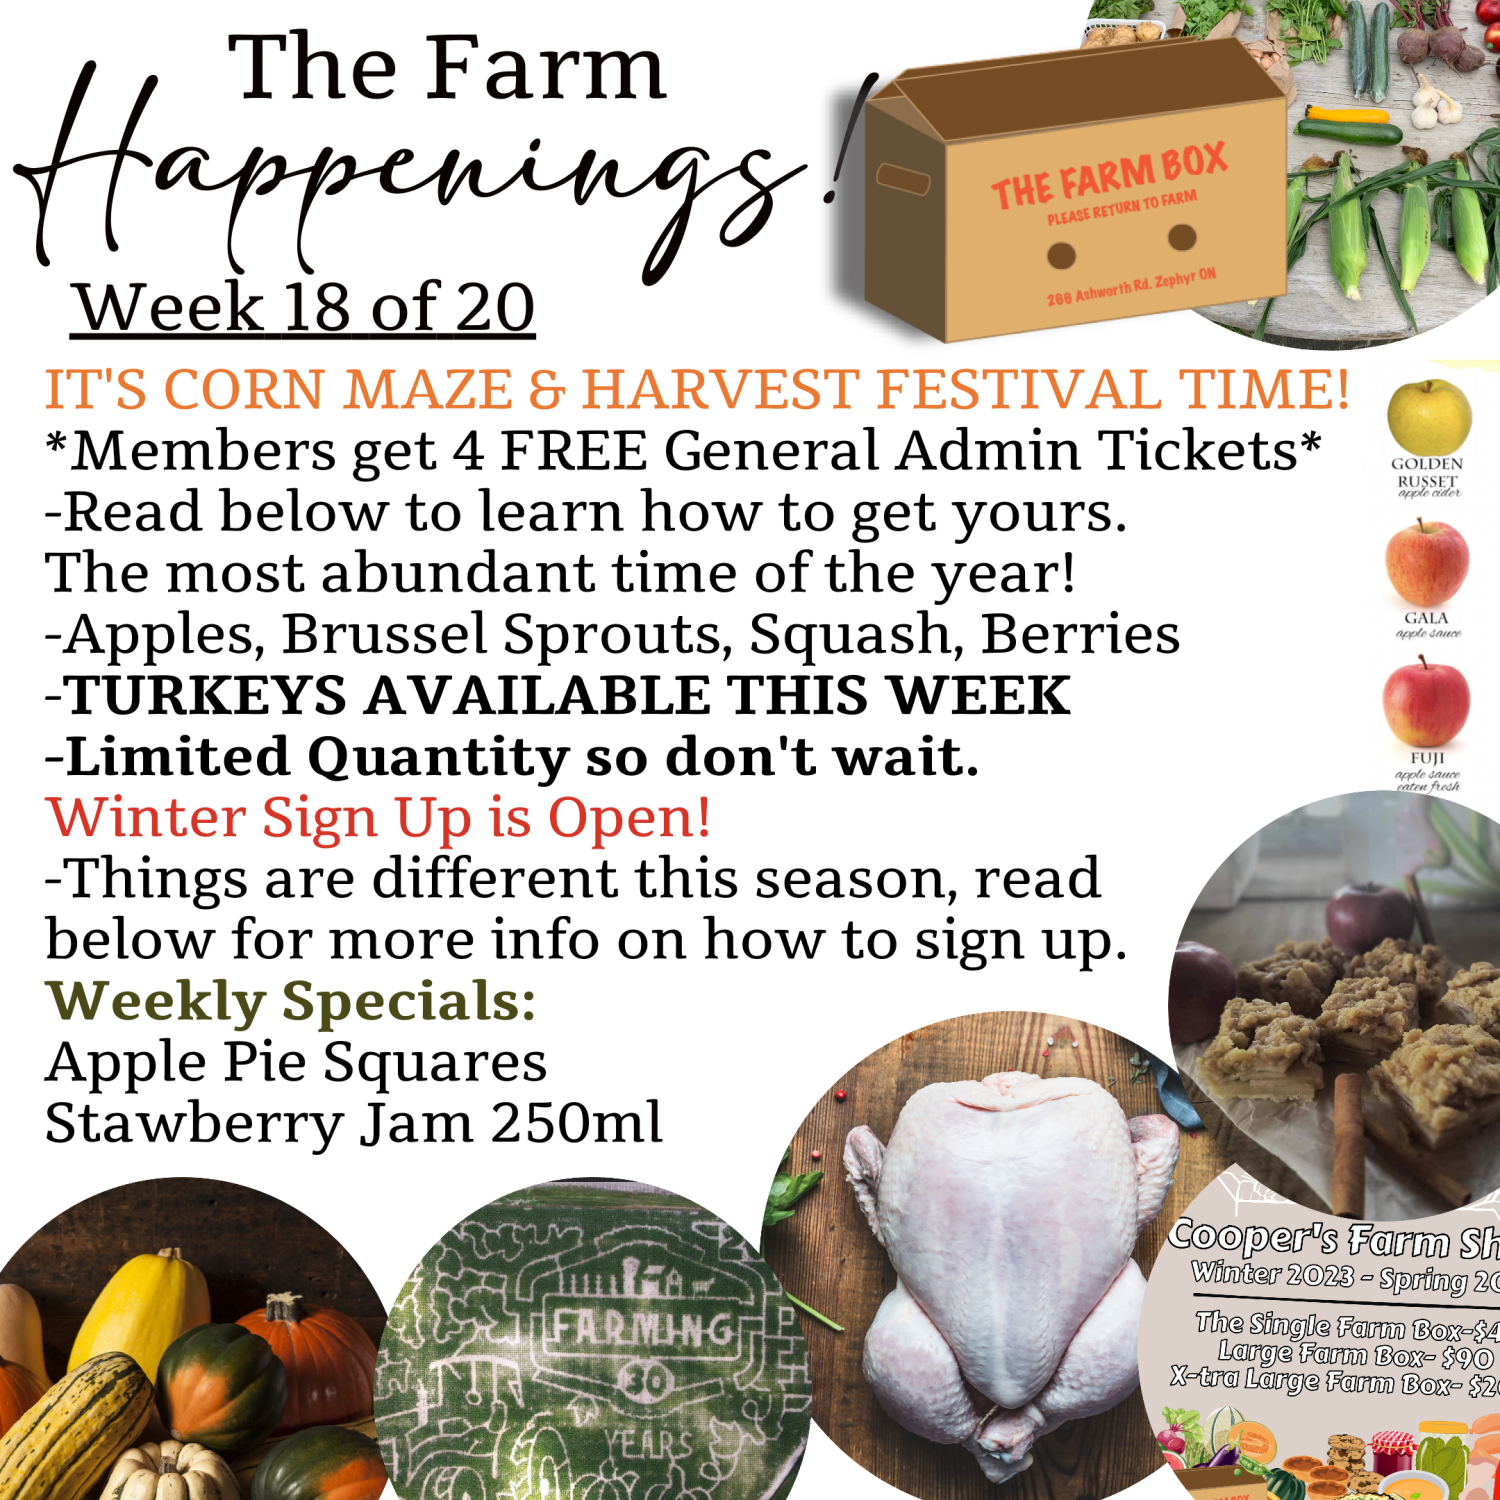 "The Farm Box"-Coopers CSA Farm Farm Happenings Week 18